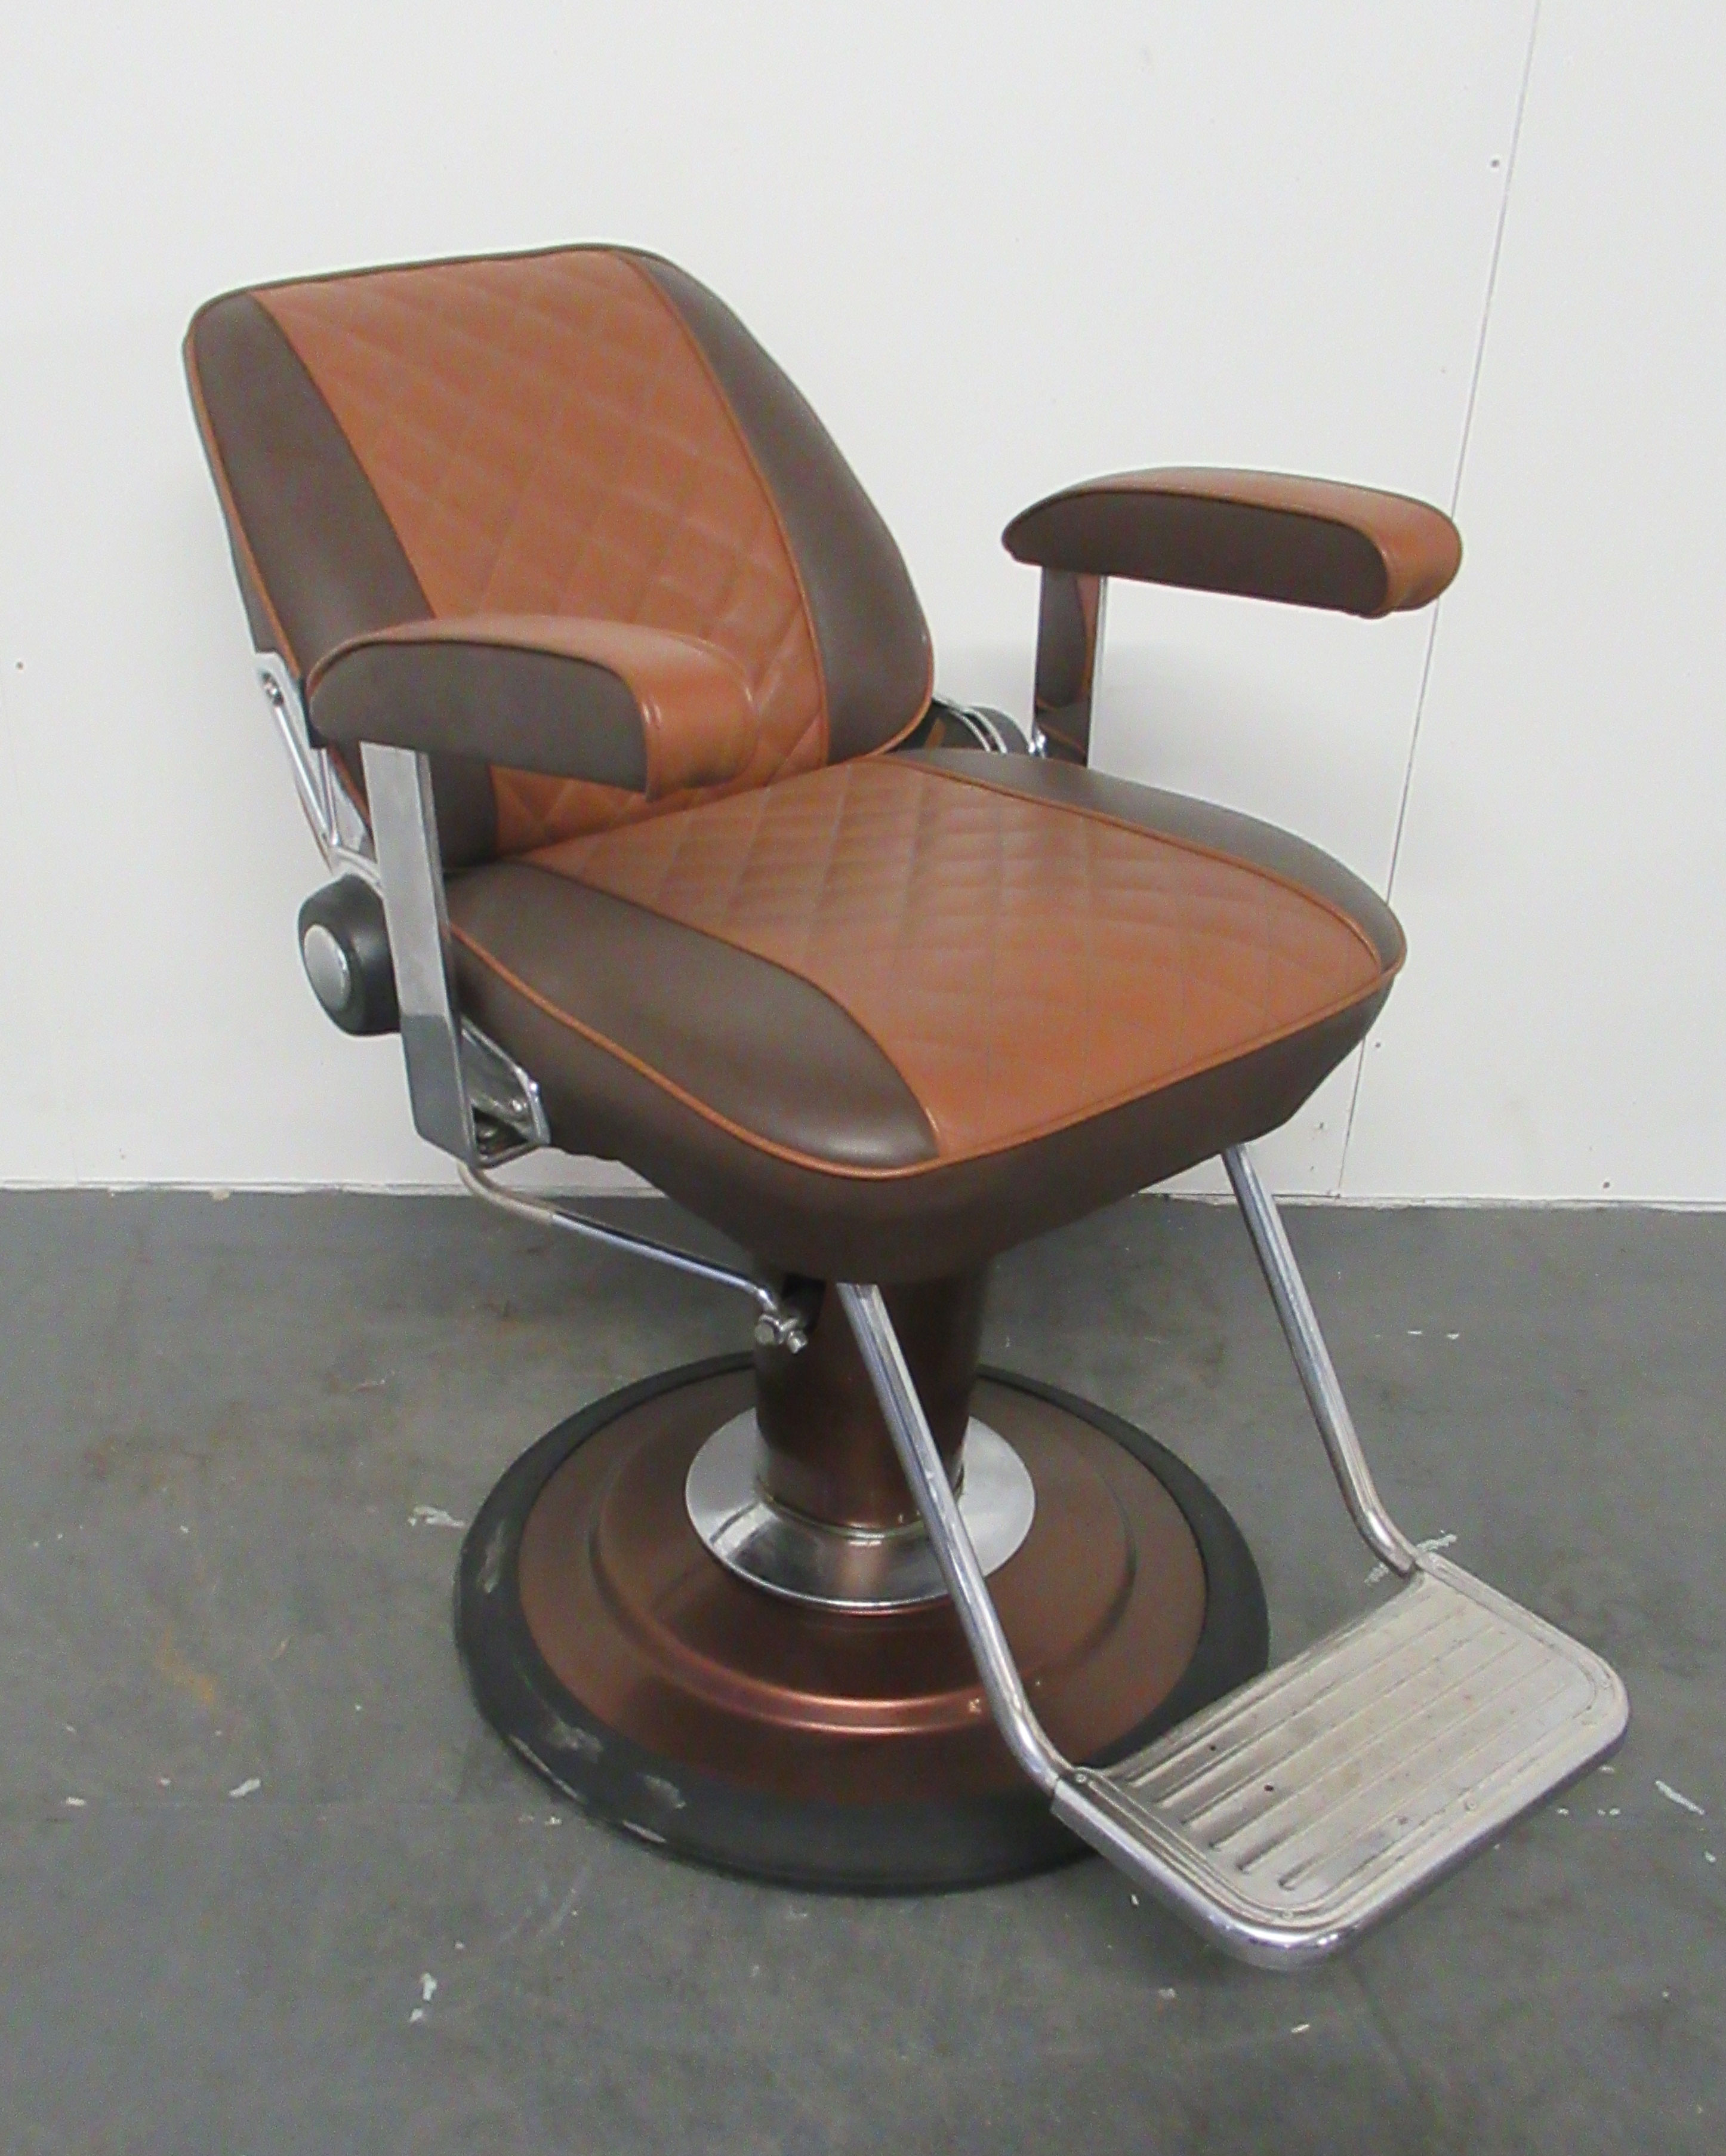 Used Sportsman Barber Chair by Takara Belmont BF51G- GRADE 2